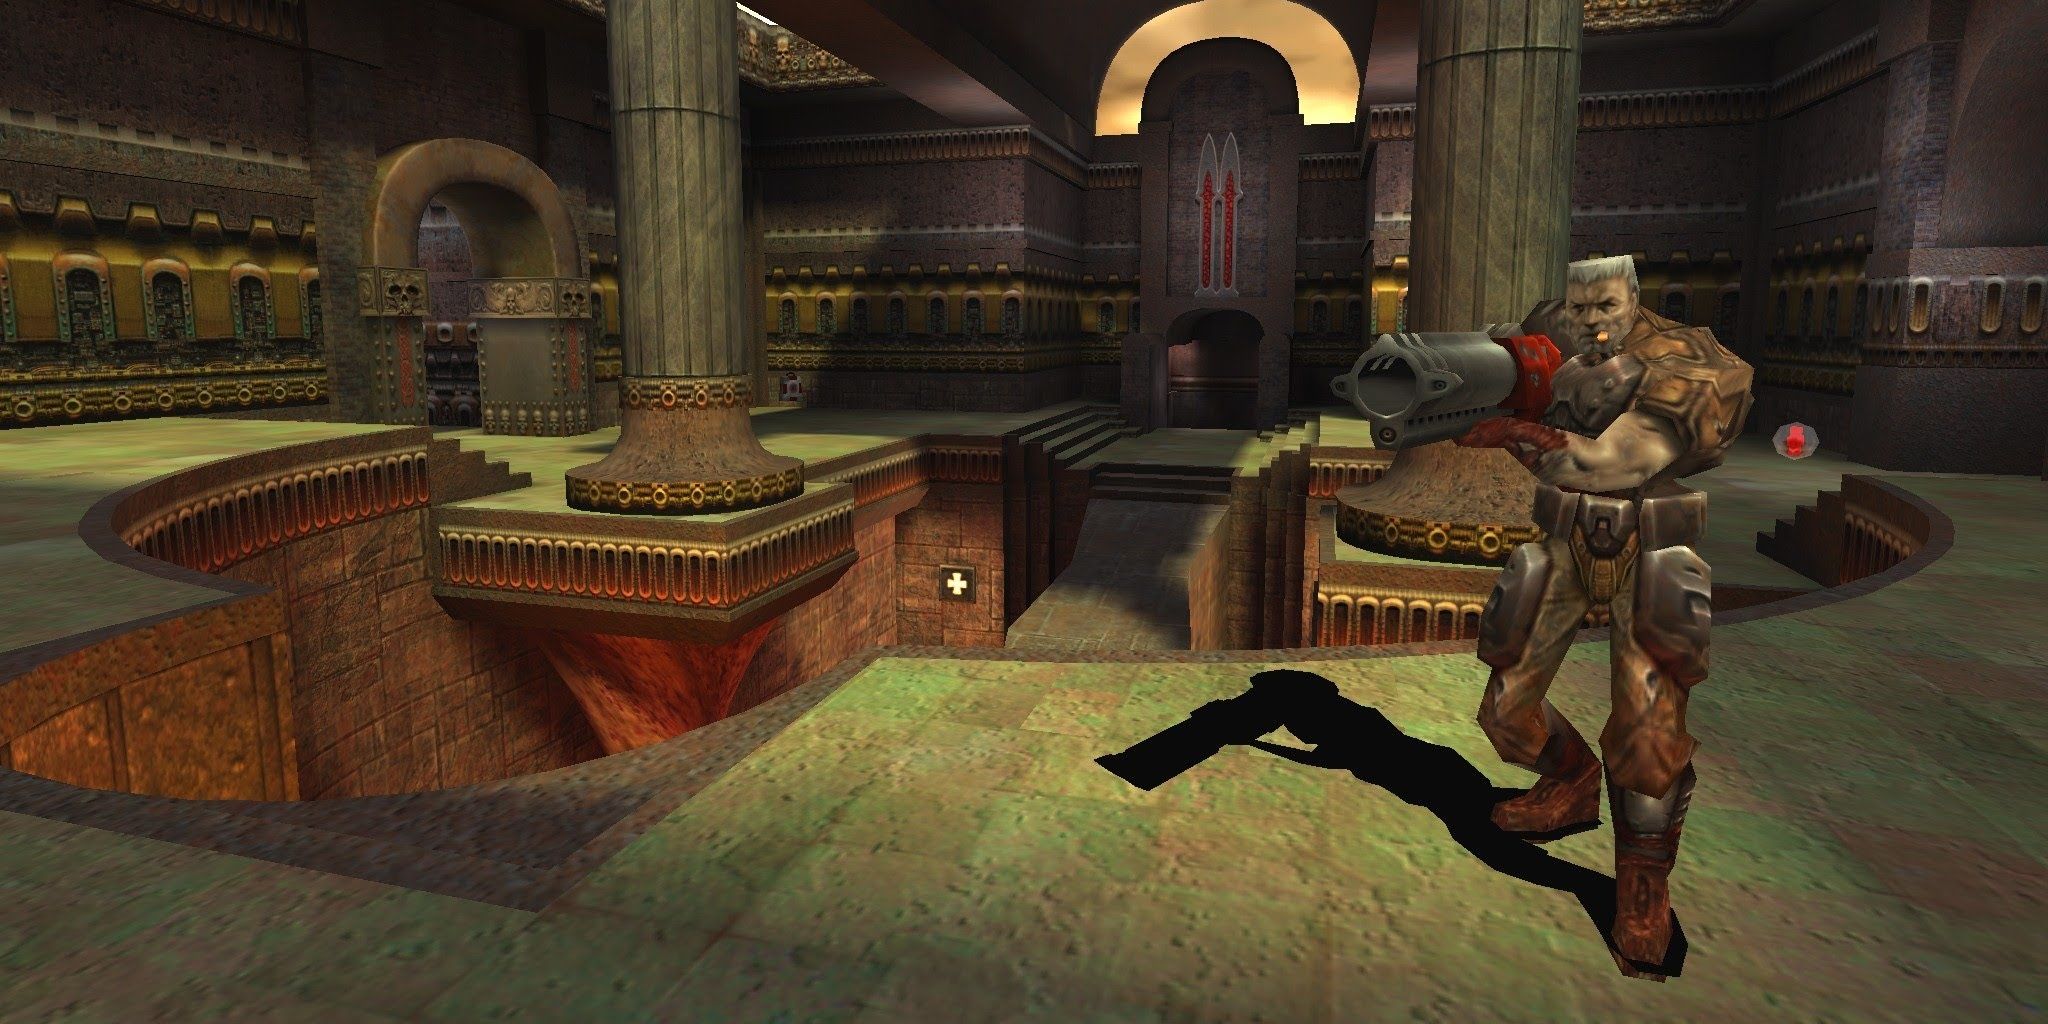 A screenshot showing Sarge in Quake III Arena